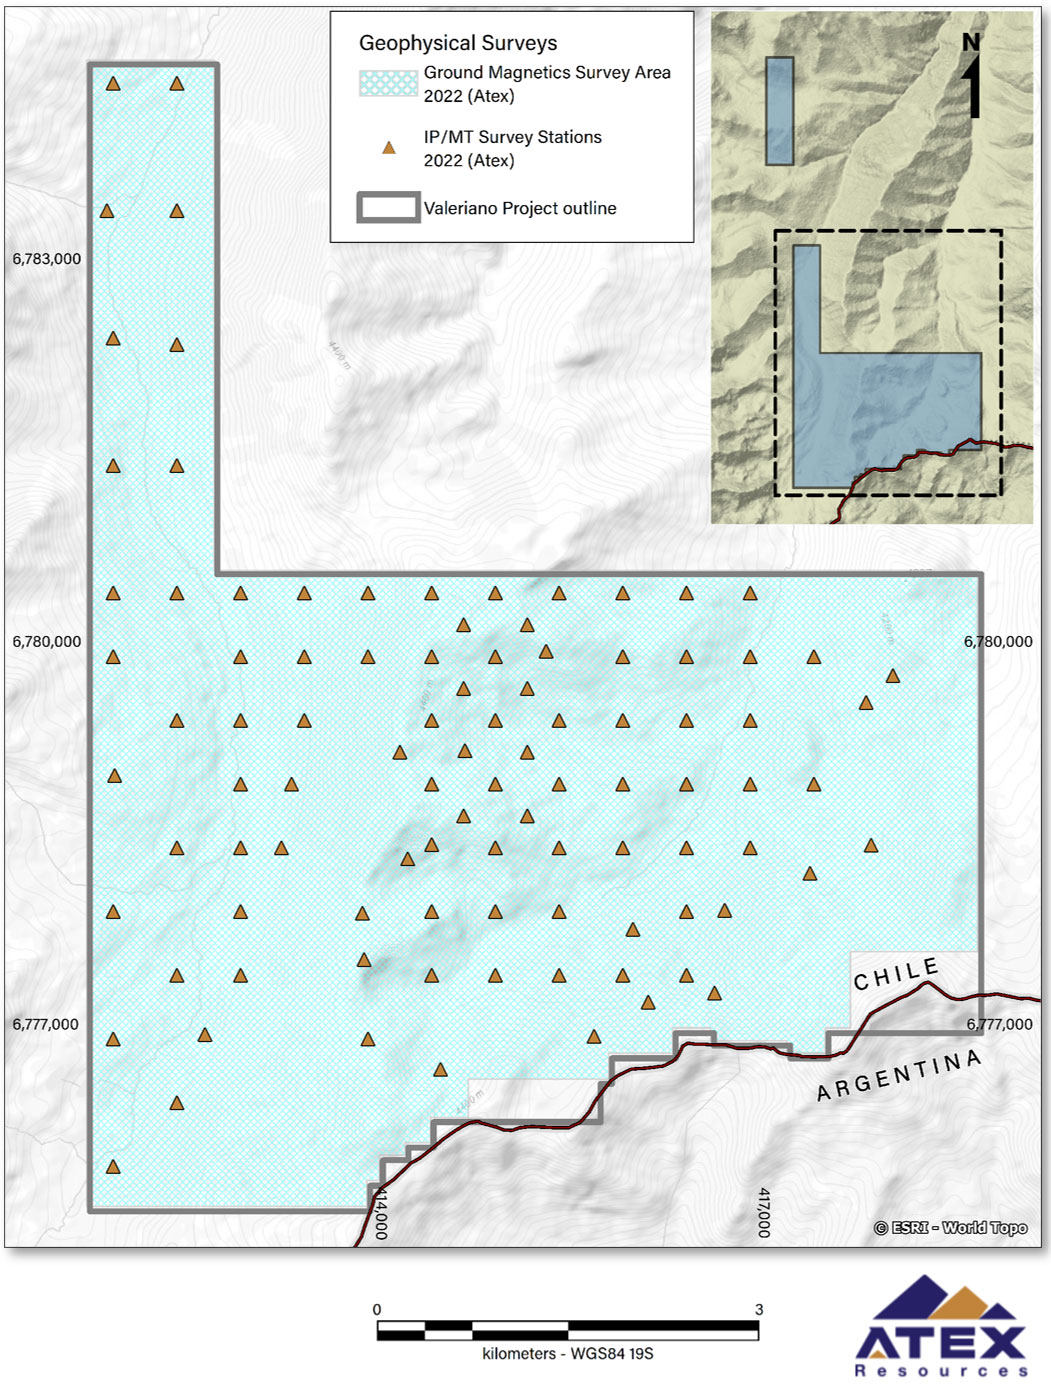 Figure 1: ATEX geophysical surveys coverage area